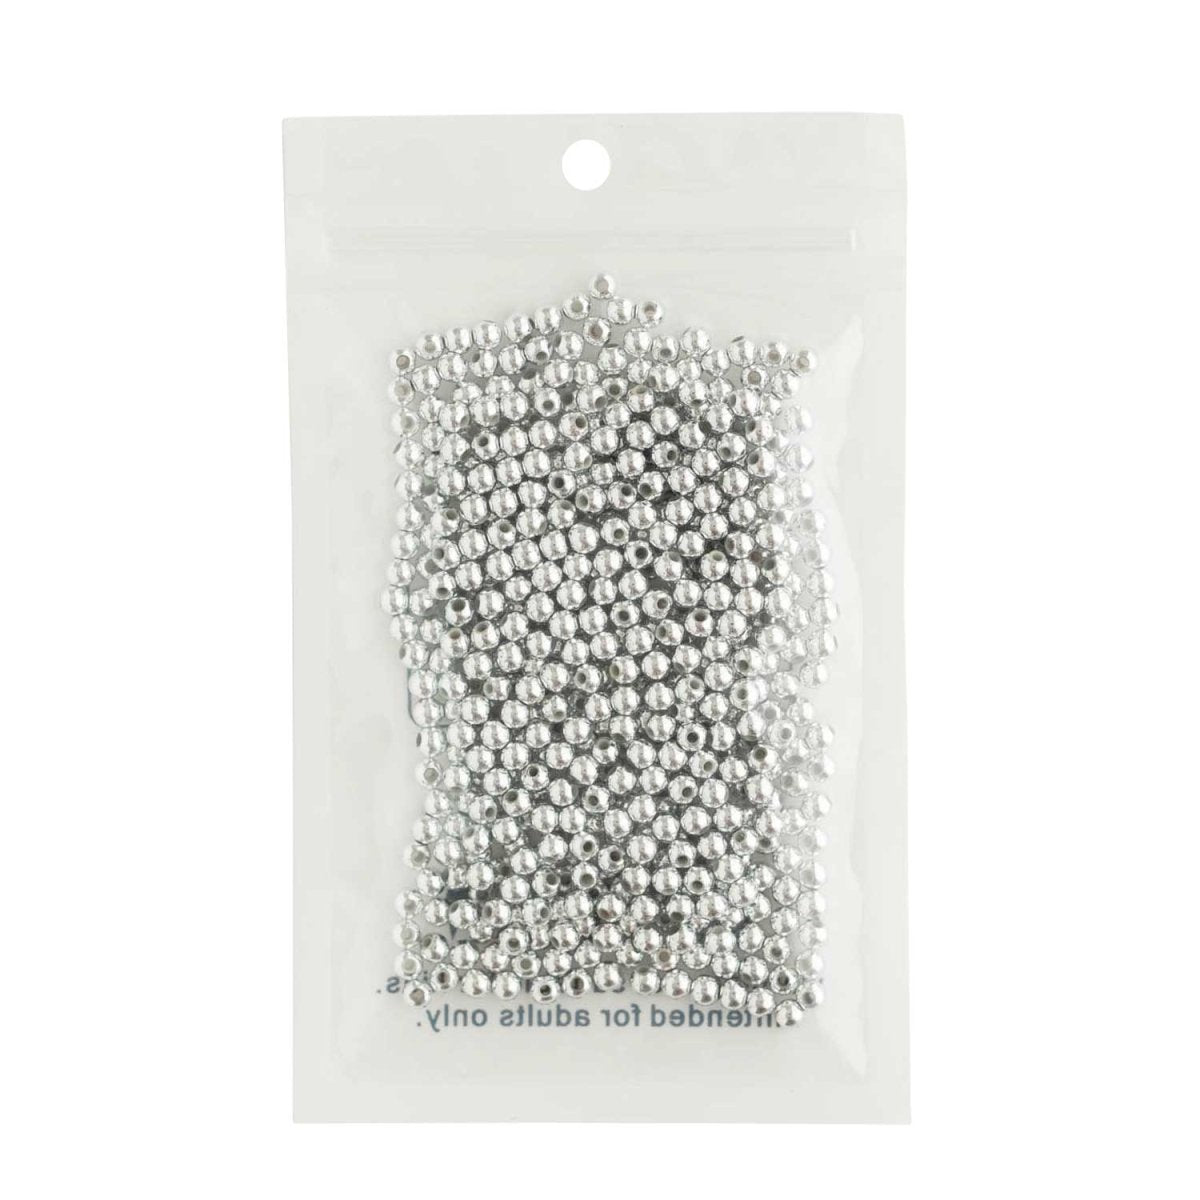 4mm Metallic Seed Beads